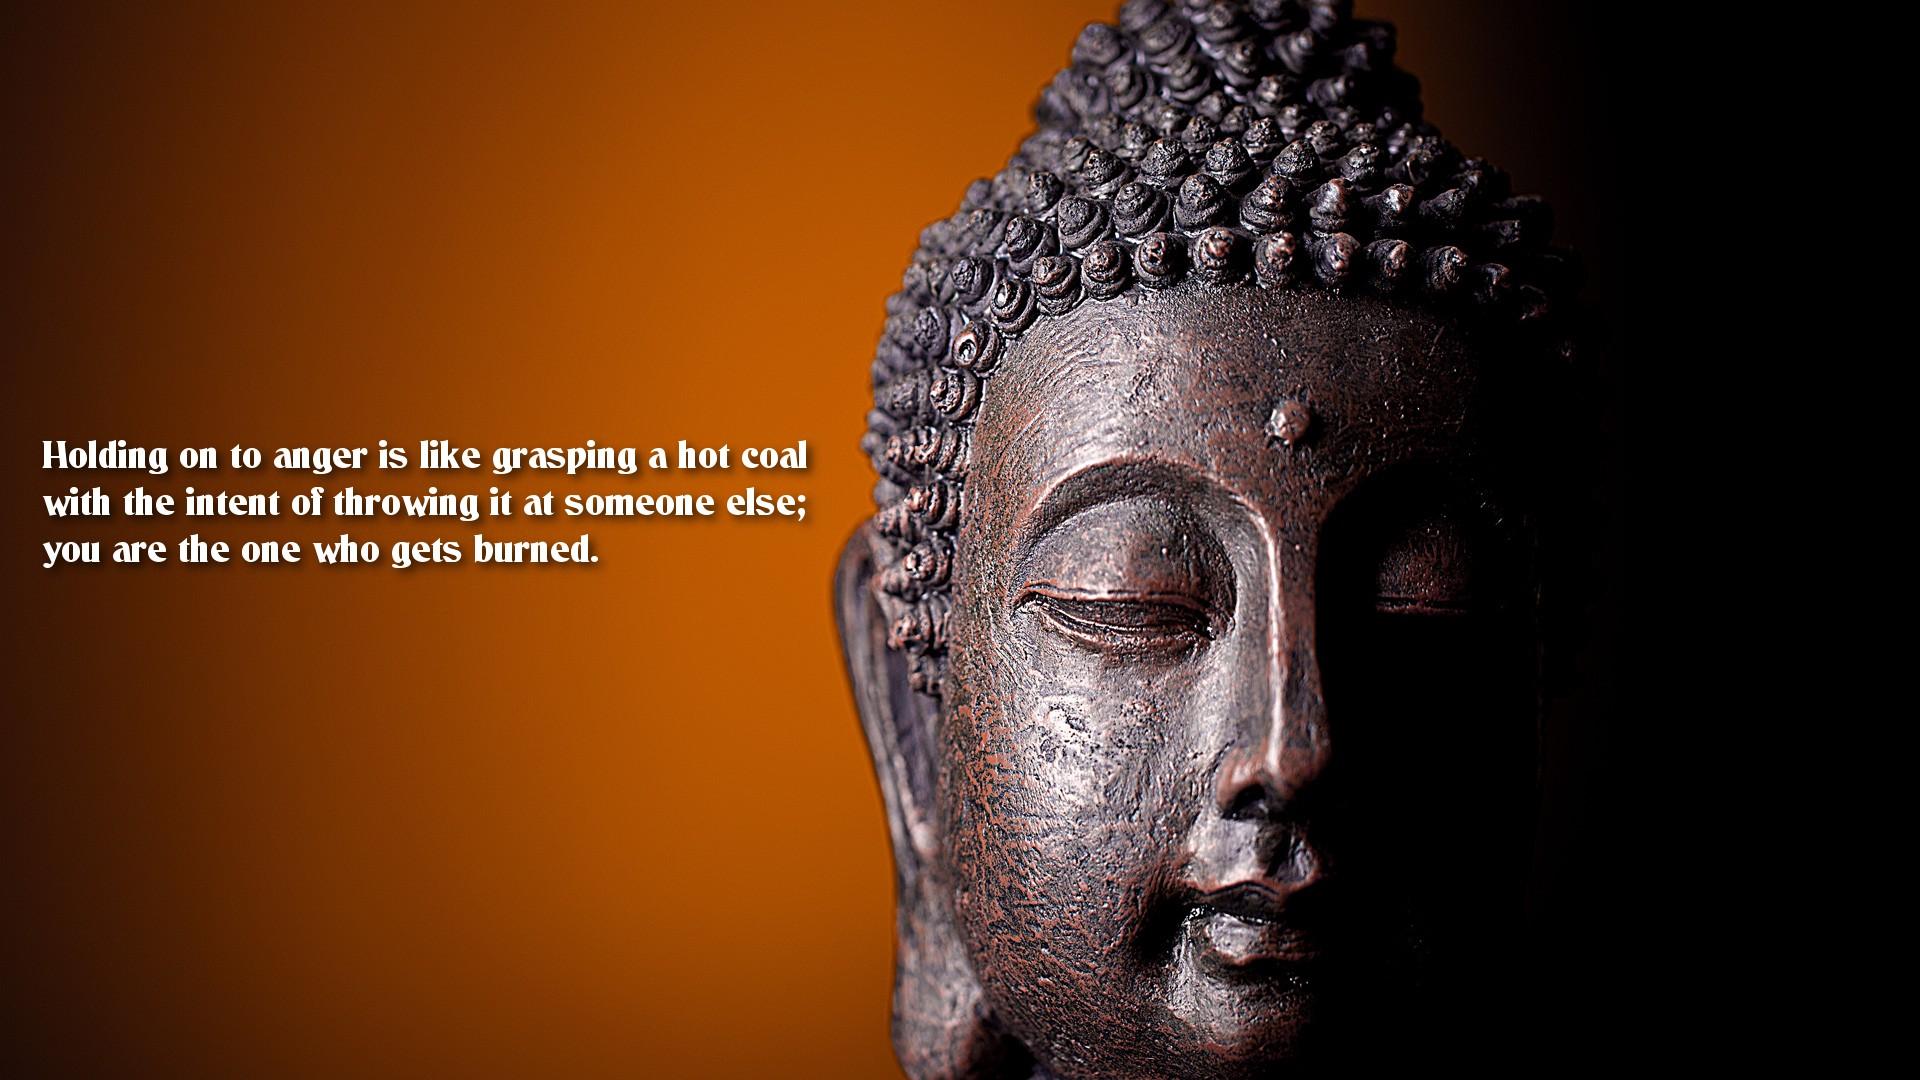 Buddha Quote About Anger Widescreen Wallpaper. Wide Wallpaper.NET